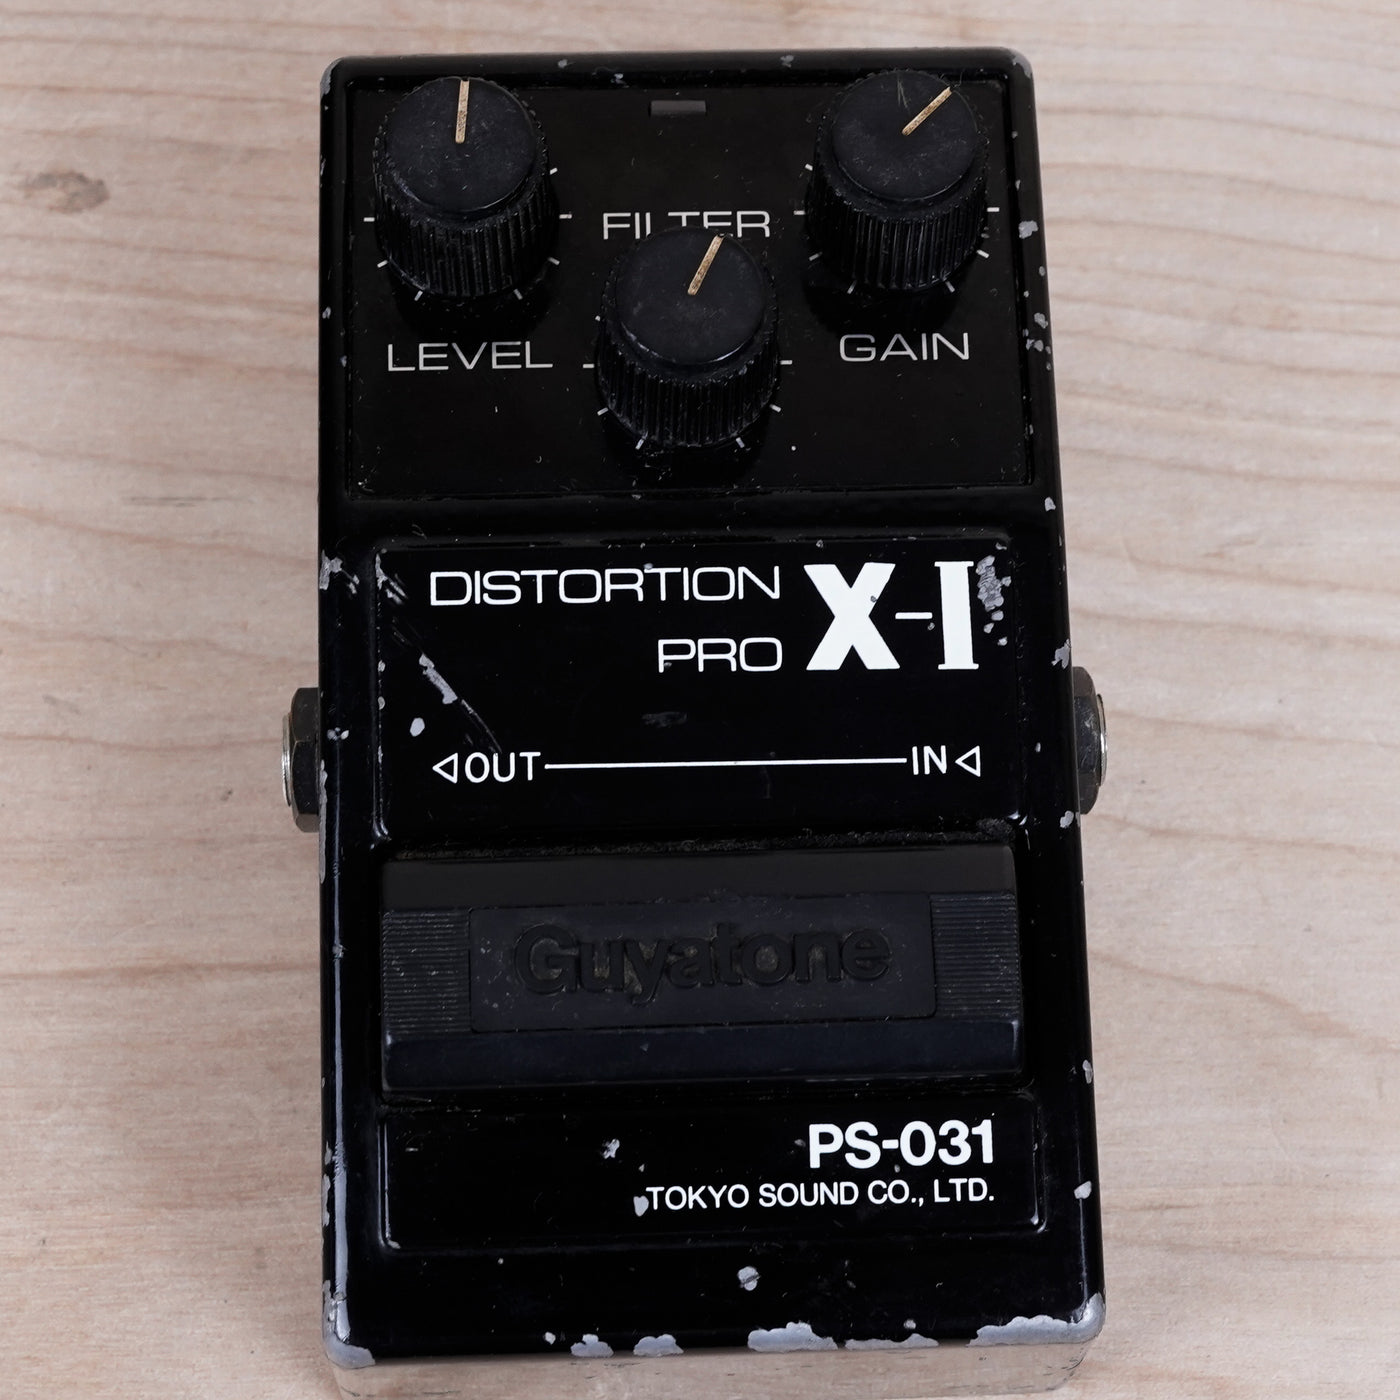 Guyatone PS-031 Distortion Pro X-1 Black 1980s MIJ